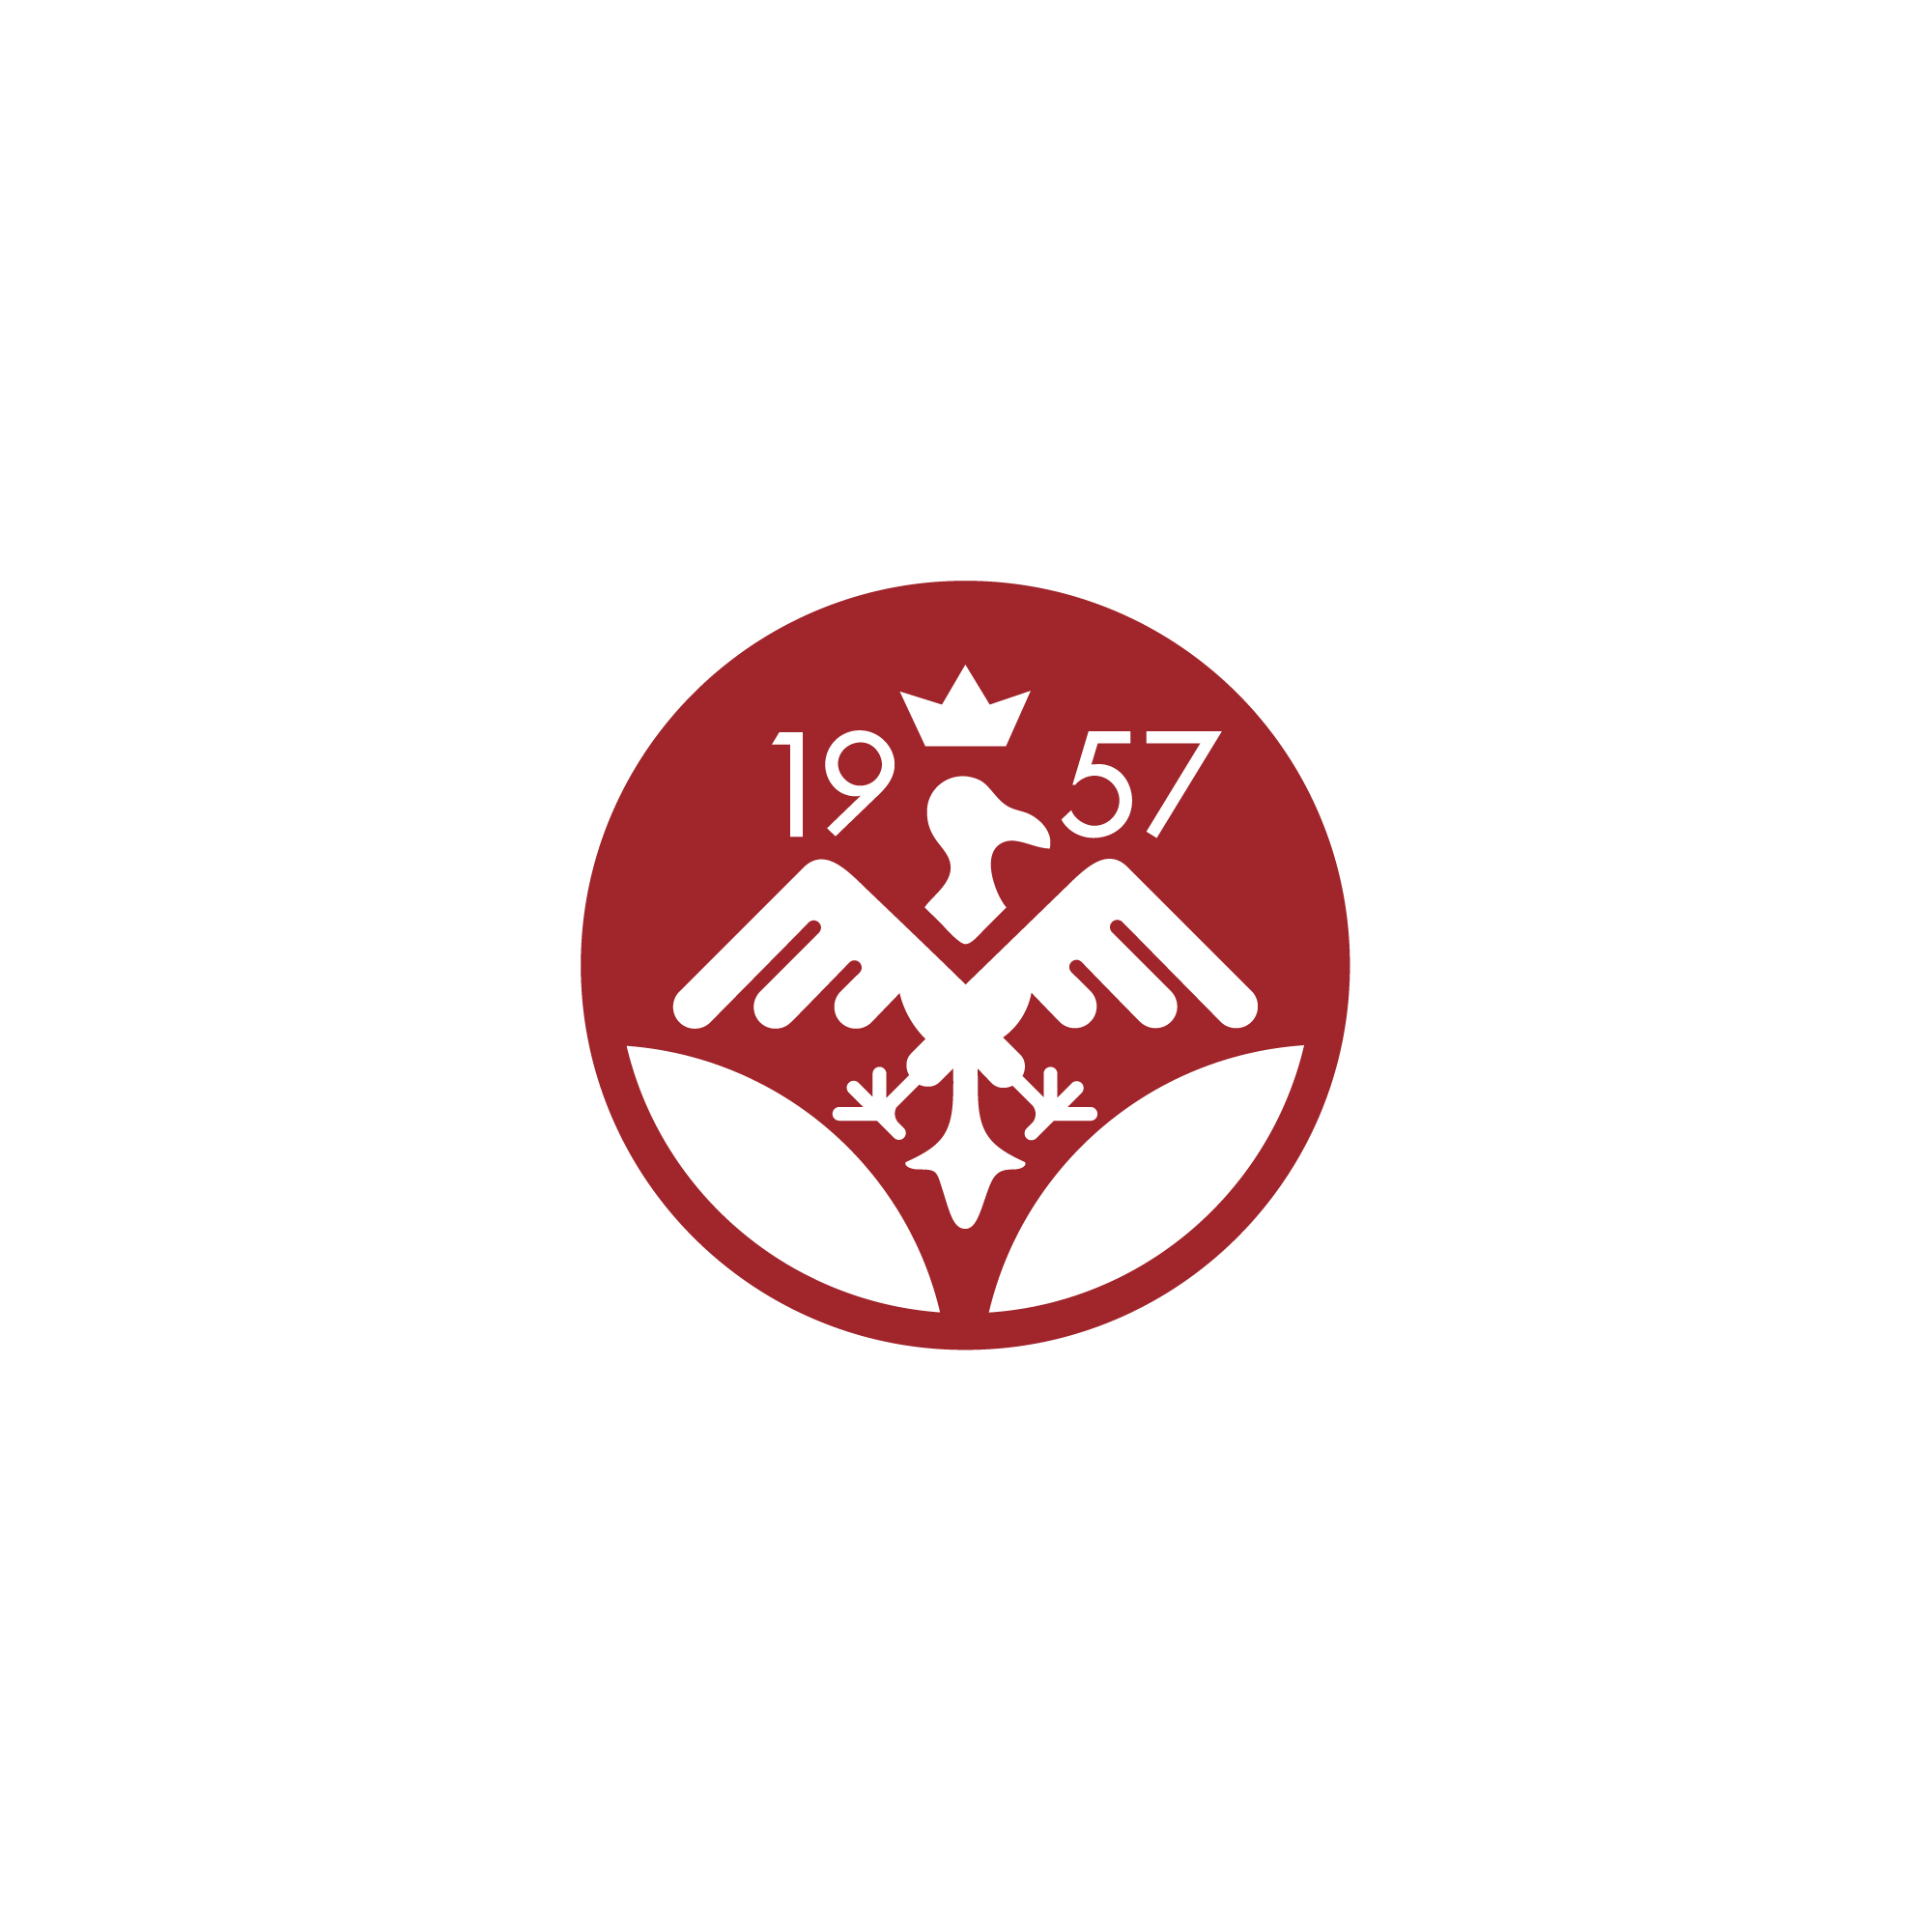 logo-design- black-white-minimalist-red-hill-eagle-circle-1957